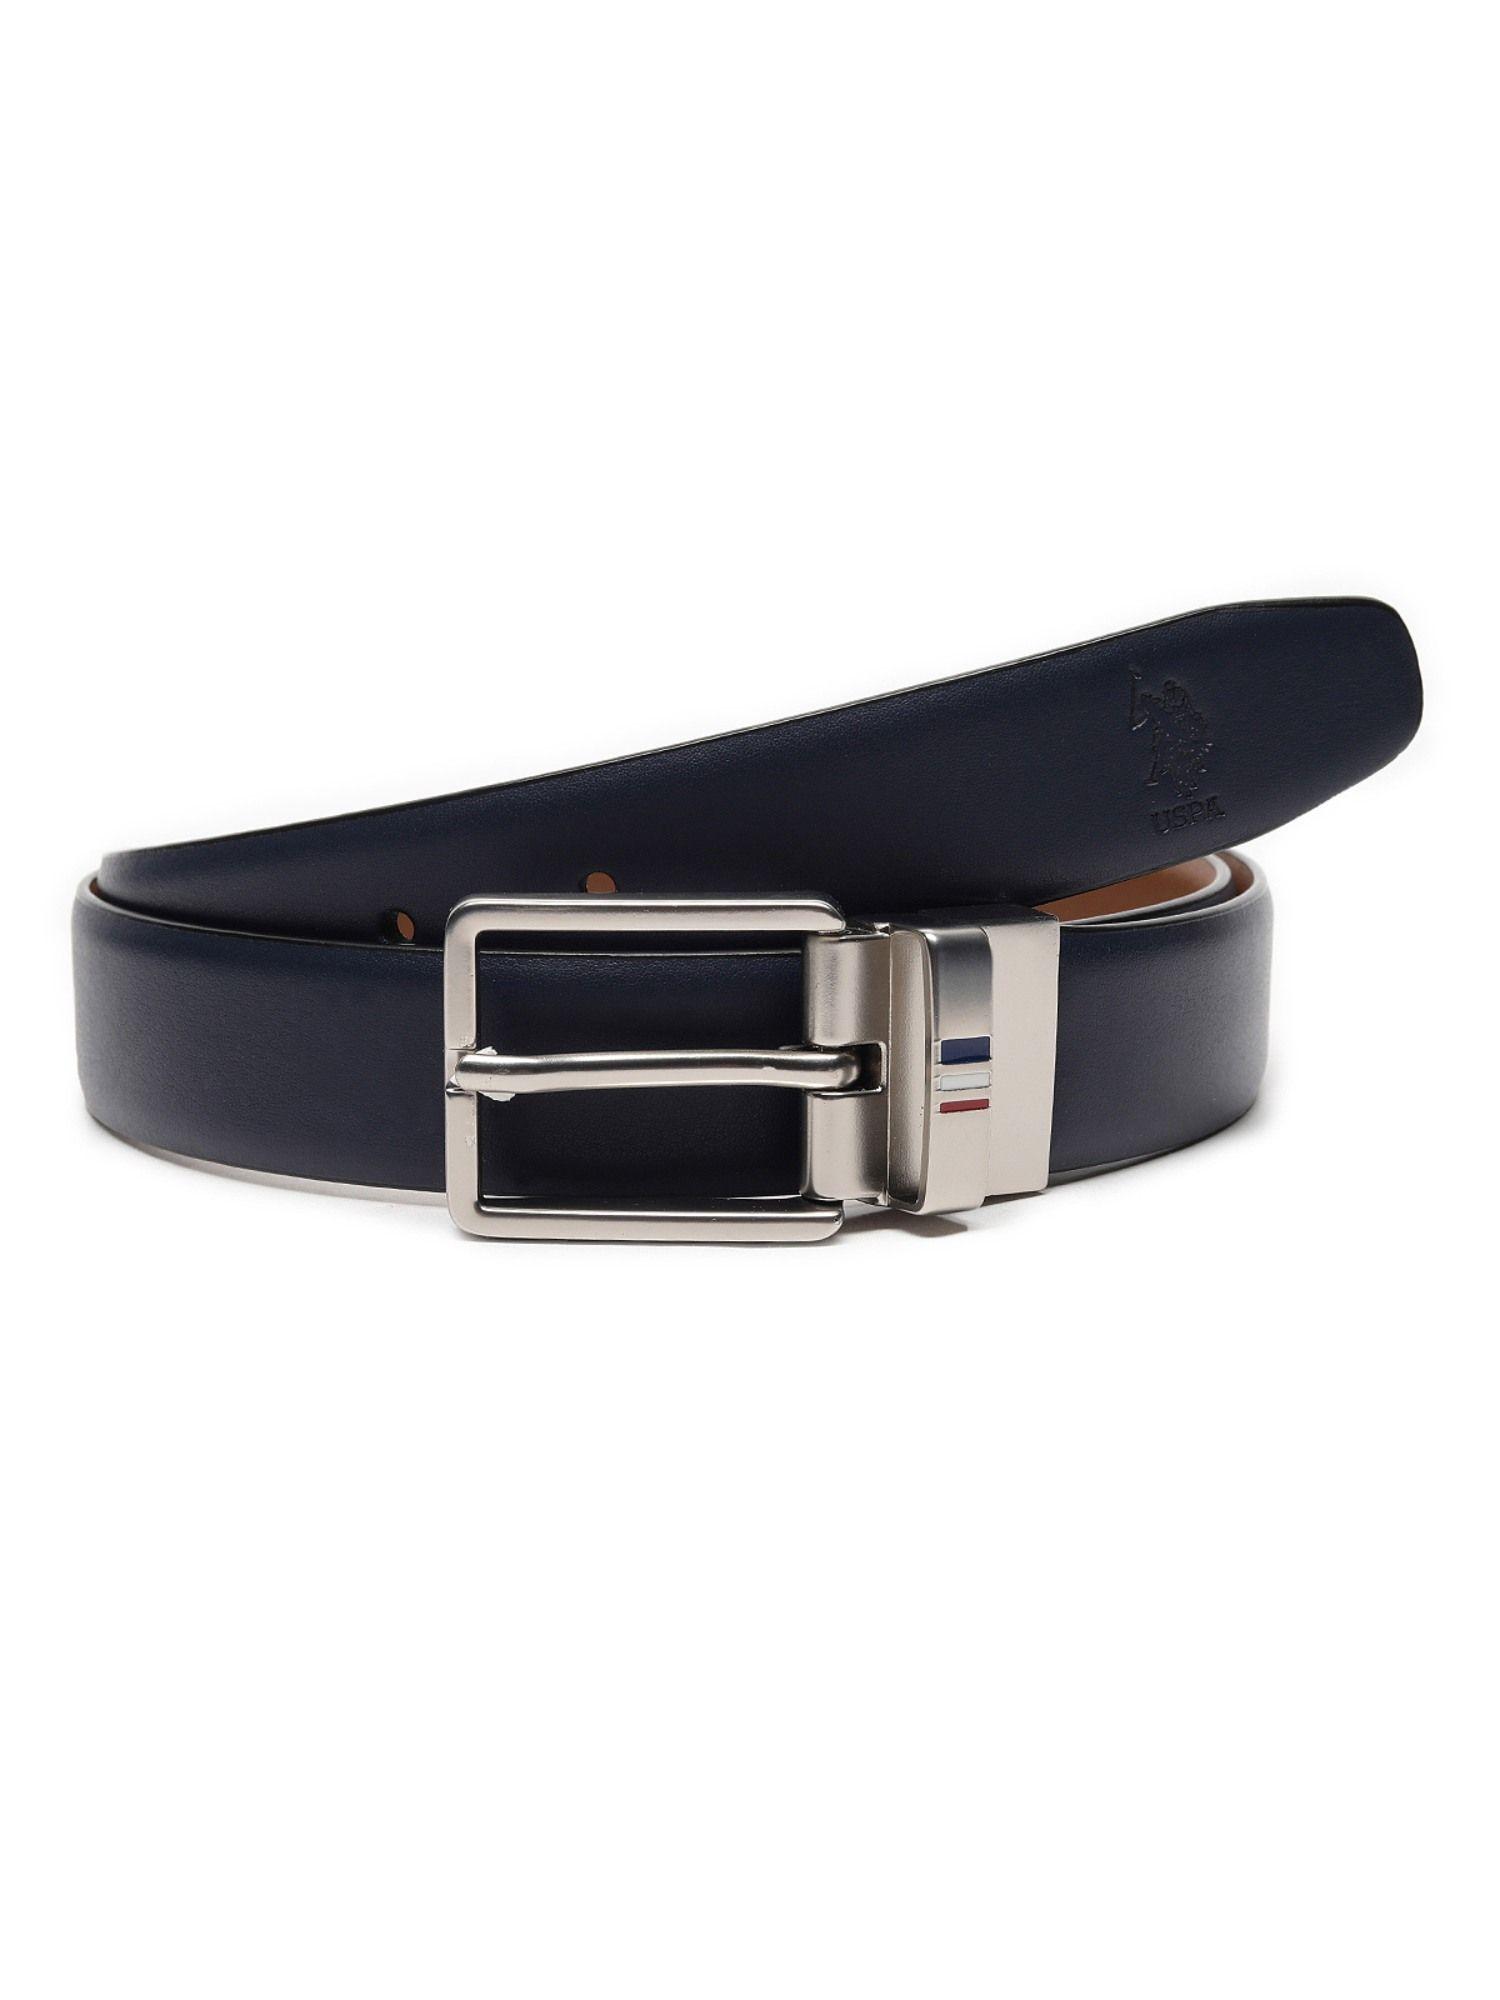 verona-men's-black-and-brown-reversible-belt